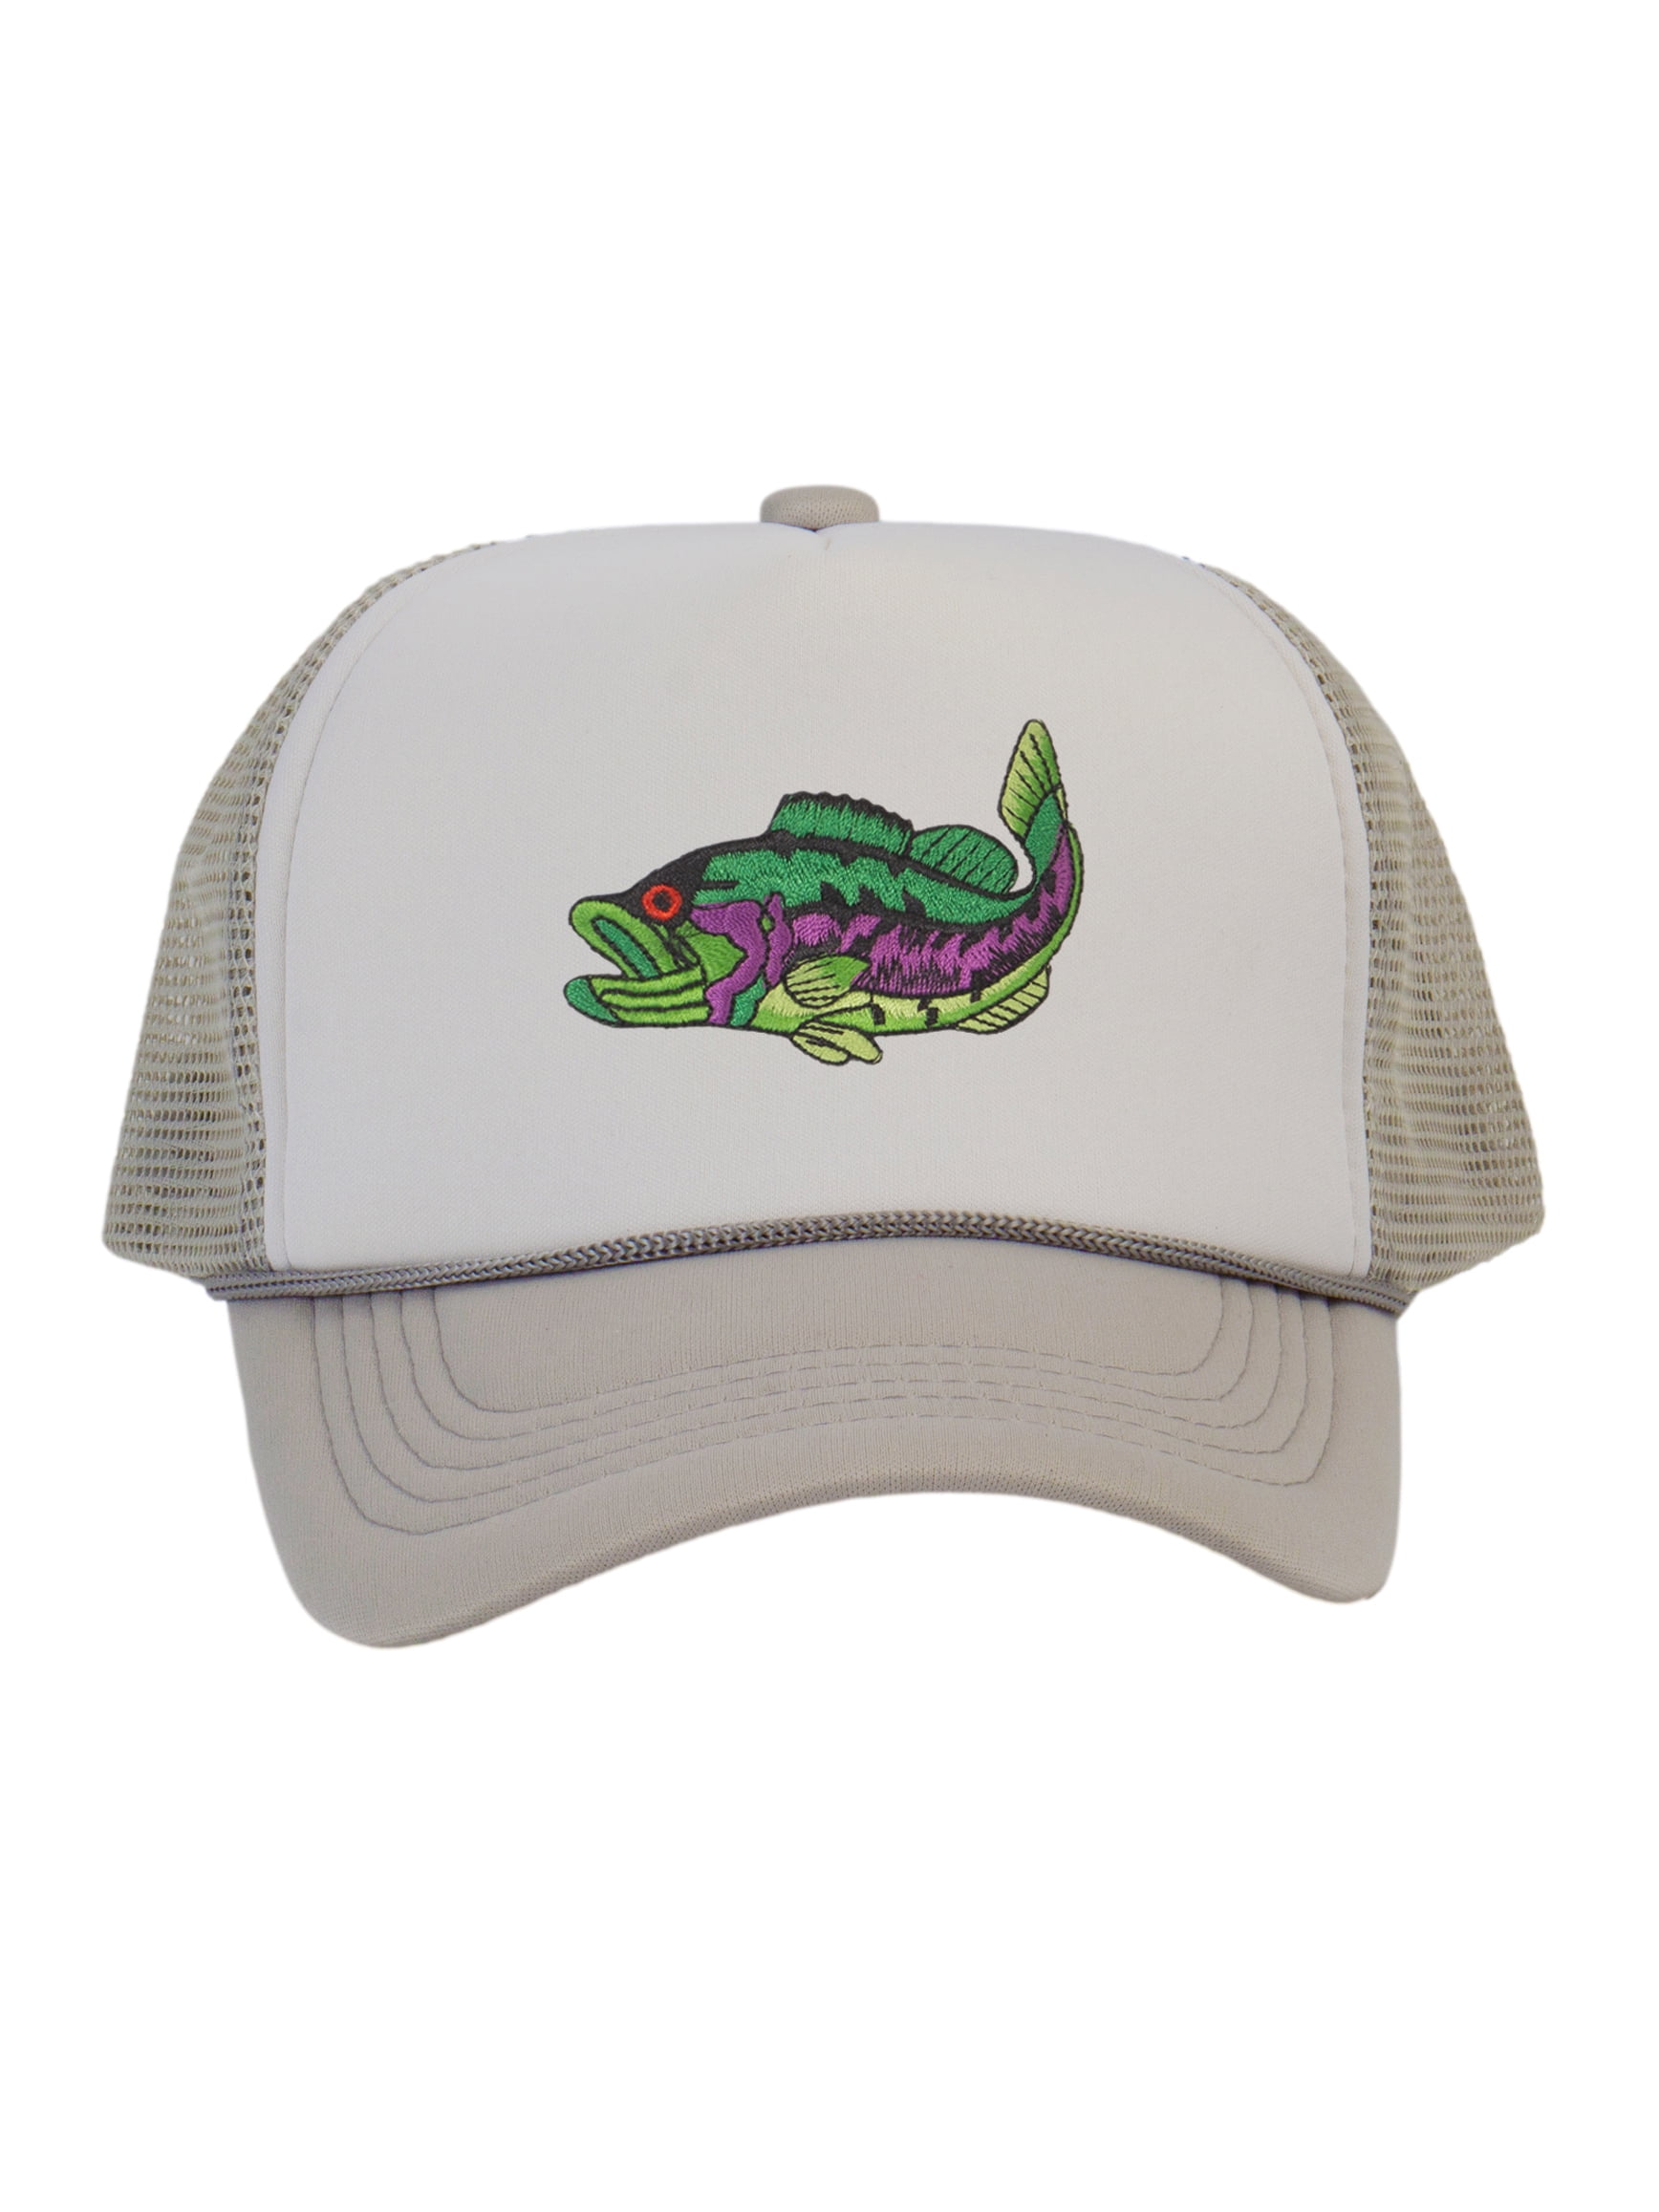 Men's Fishing Cap Outdoor Bass Fisherman Trucker Hat, White/Lt Grey